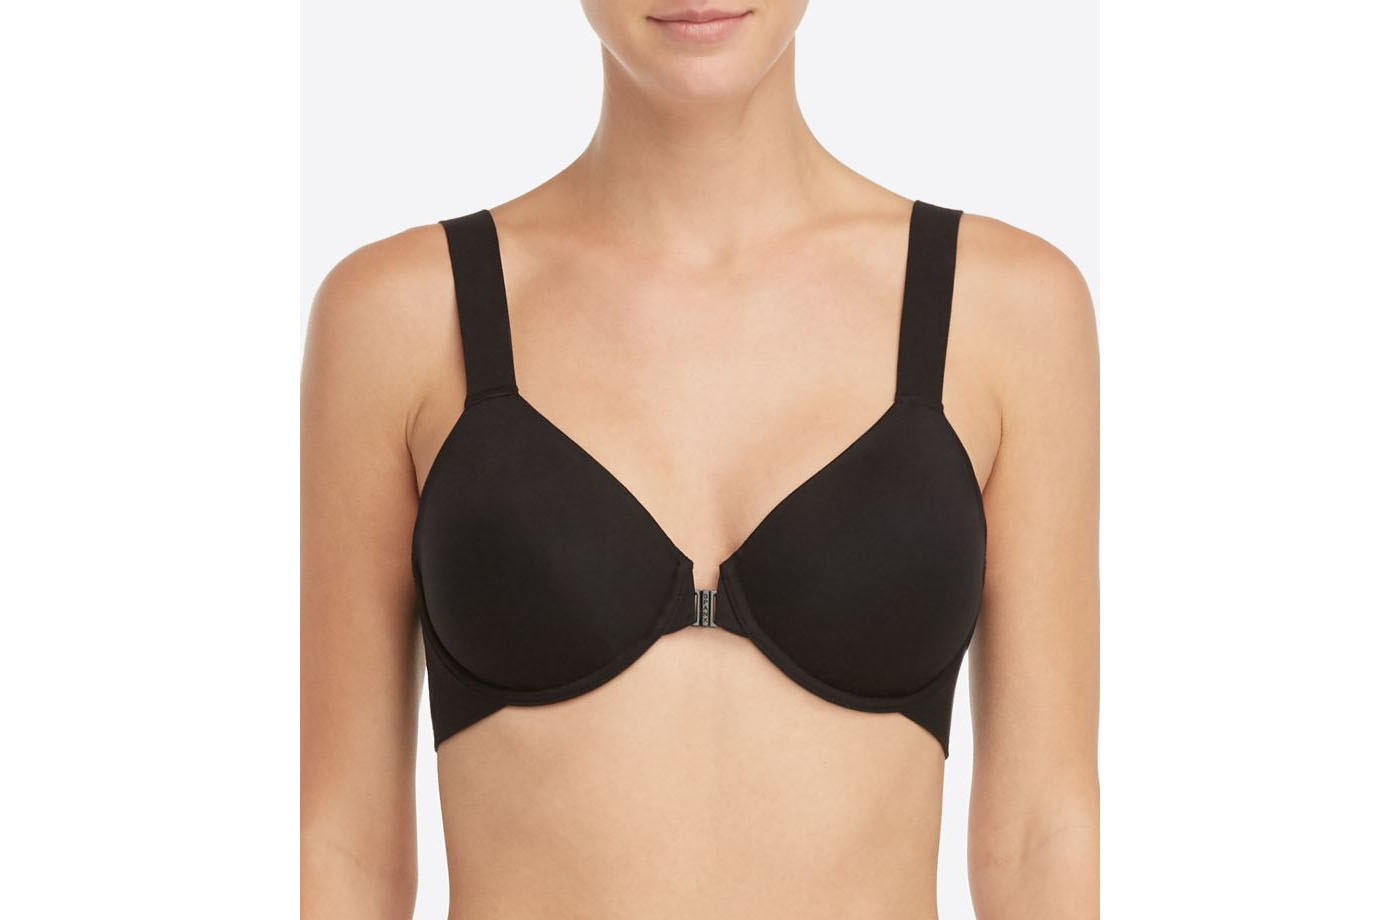 Spanx's most comfortable minimizing bra